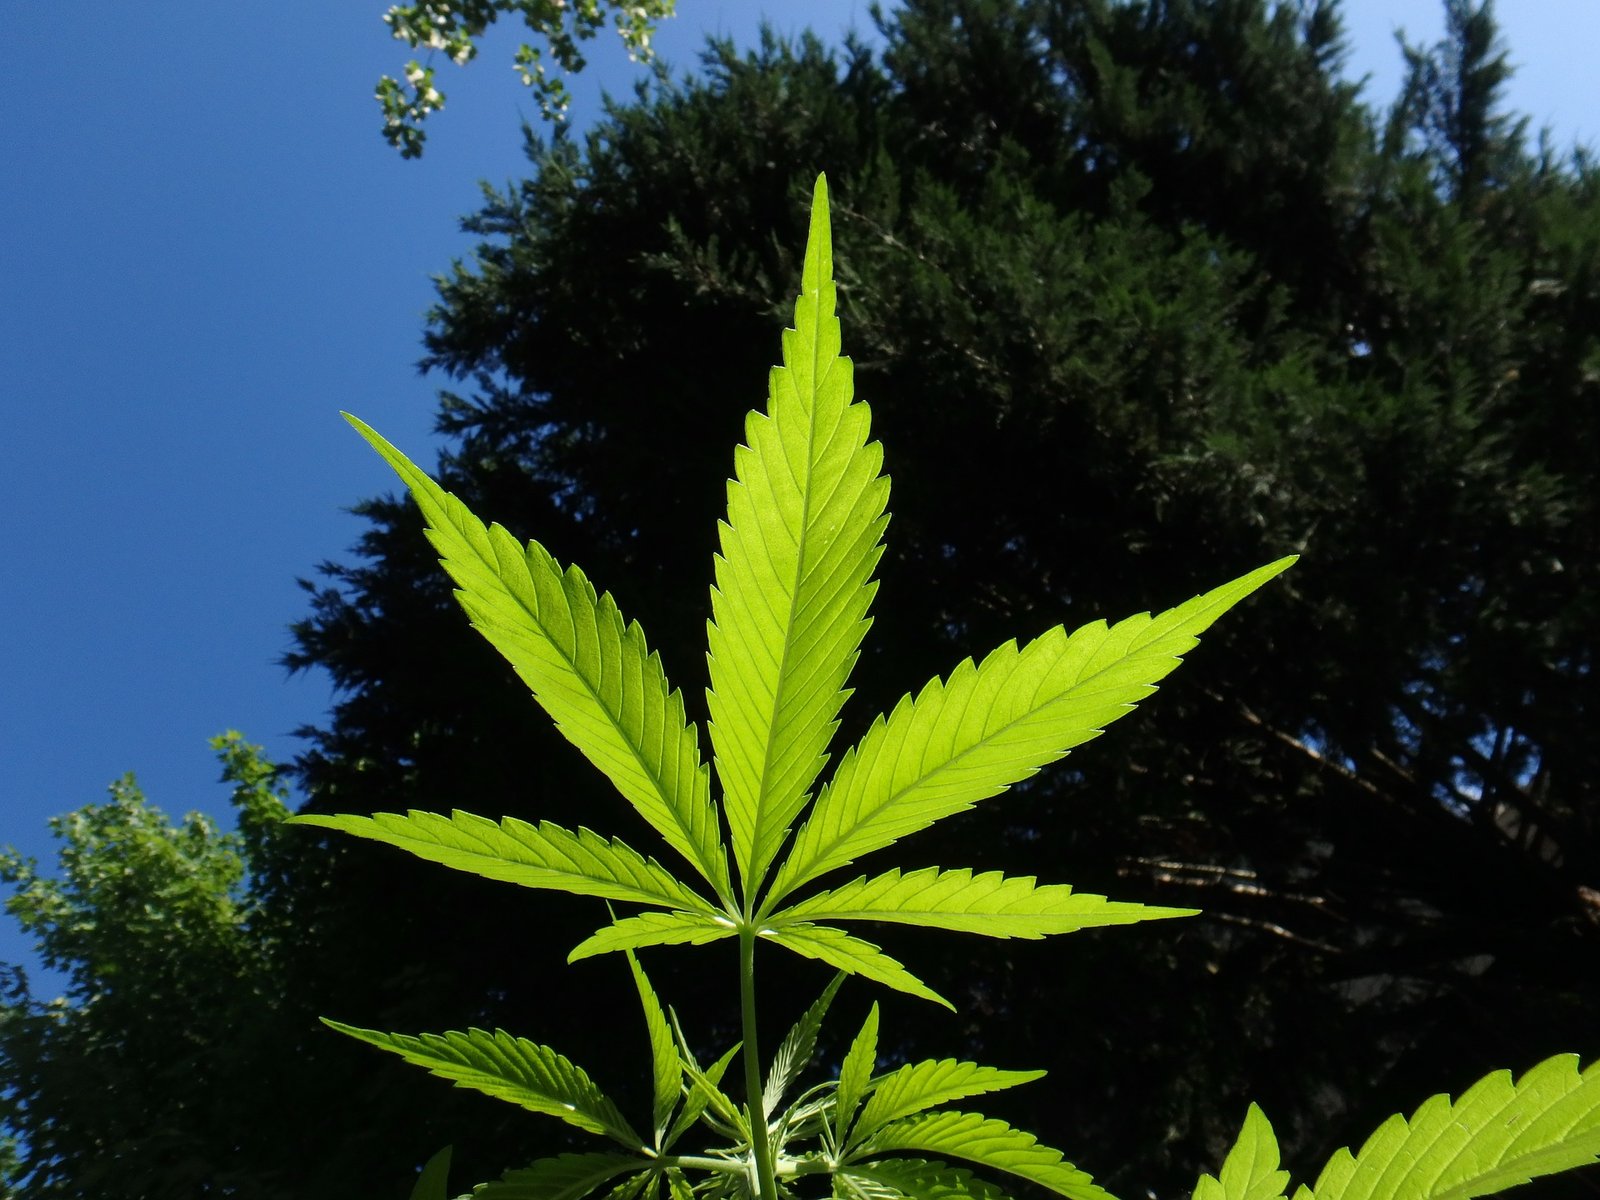 Sunlight | Cannabis Growing